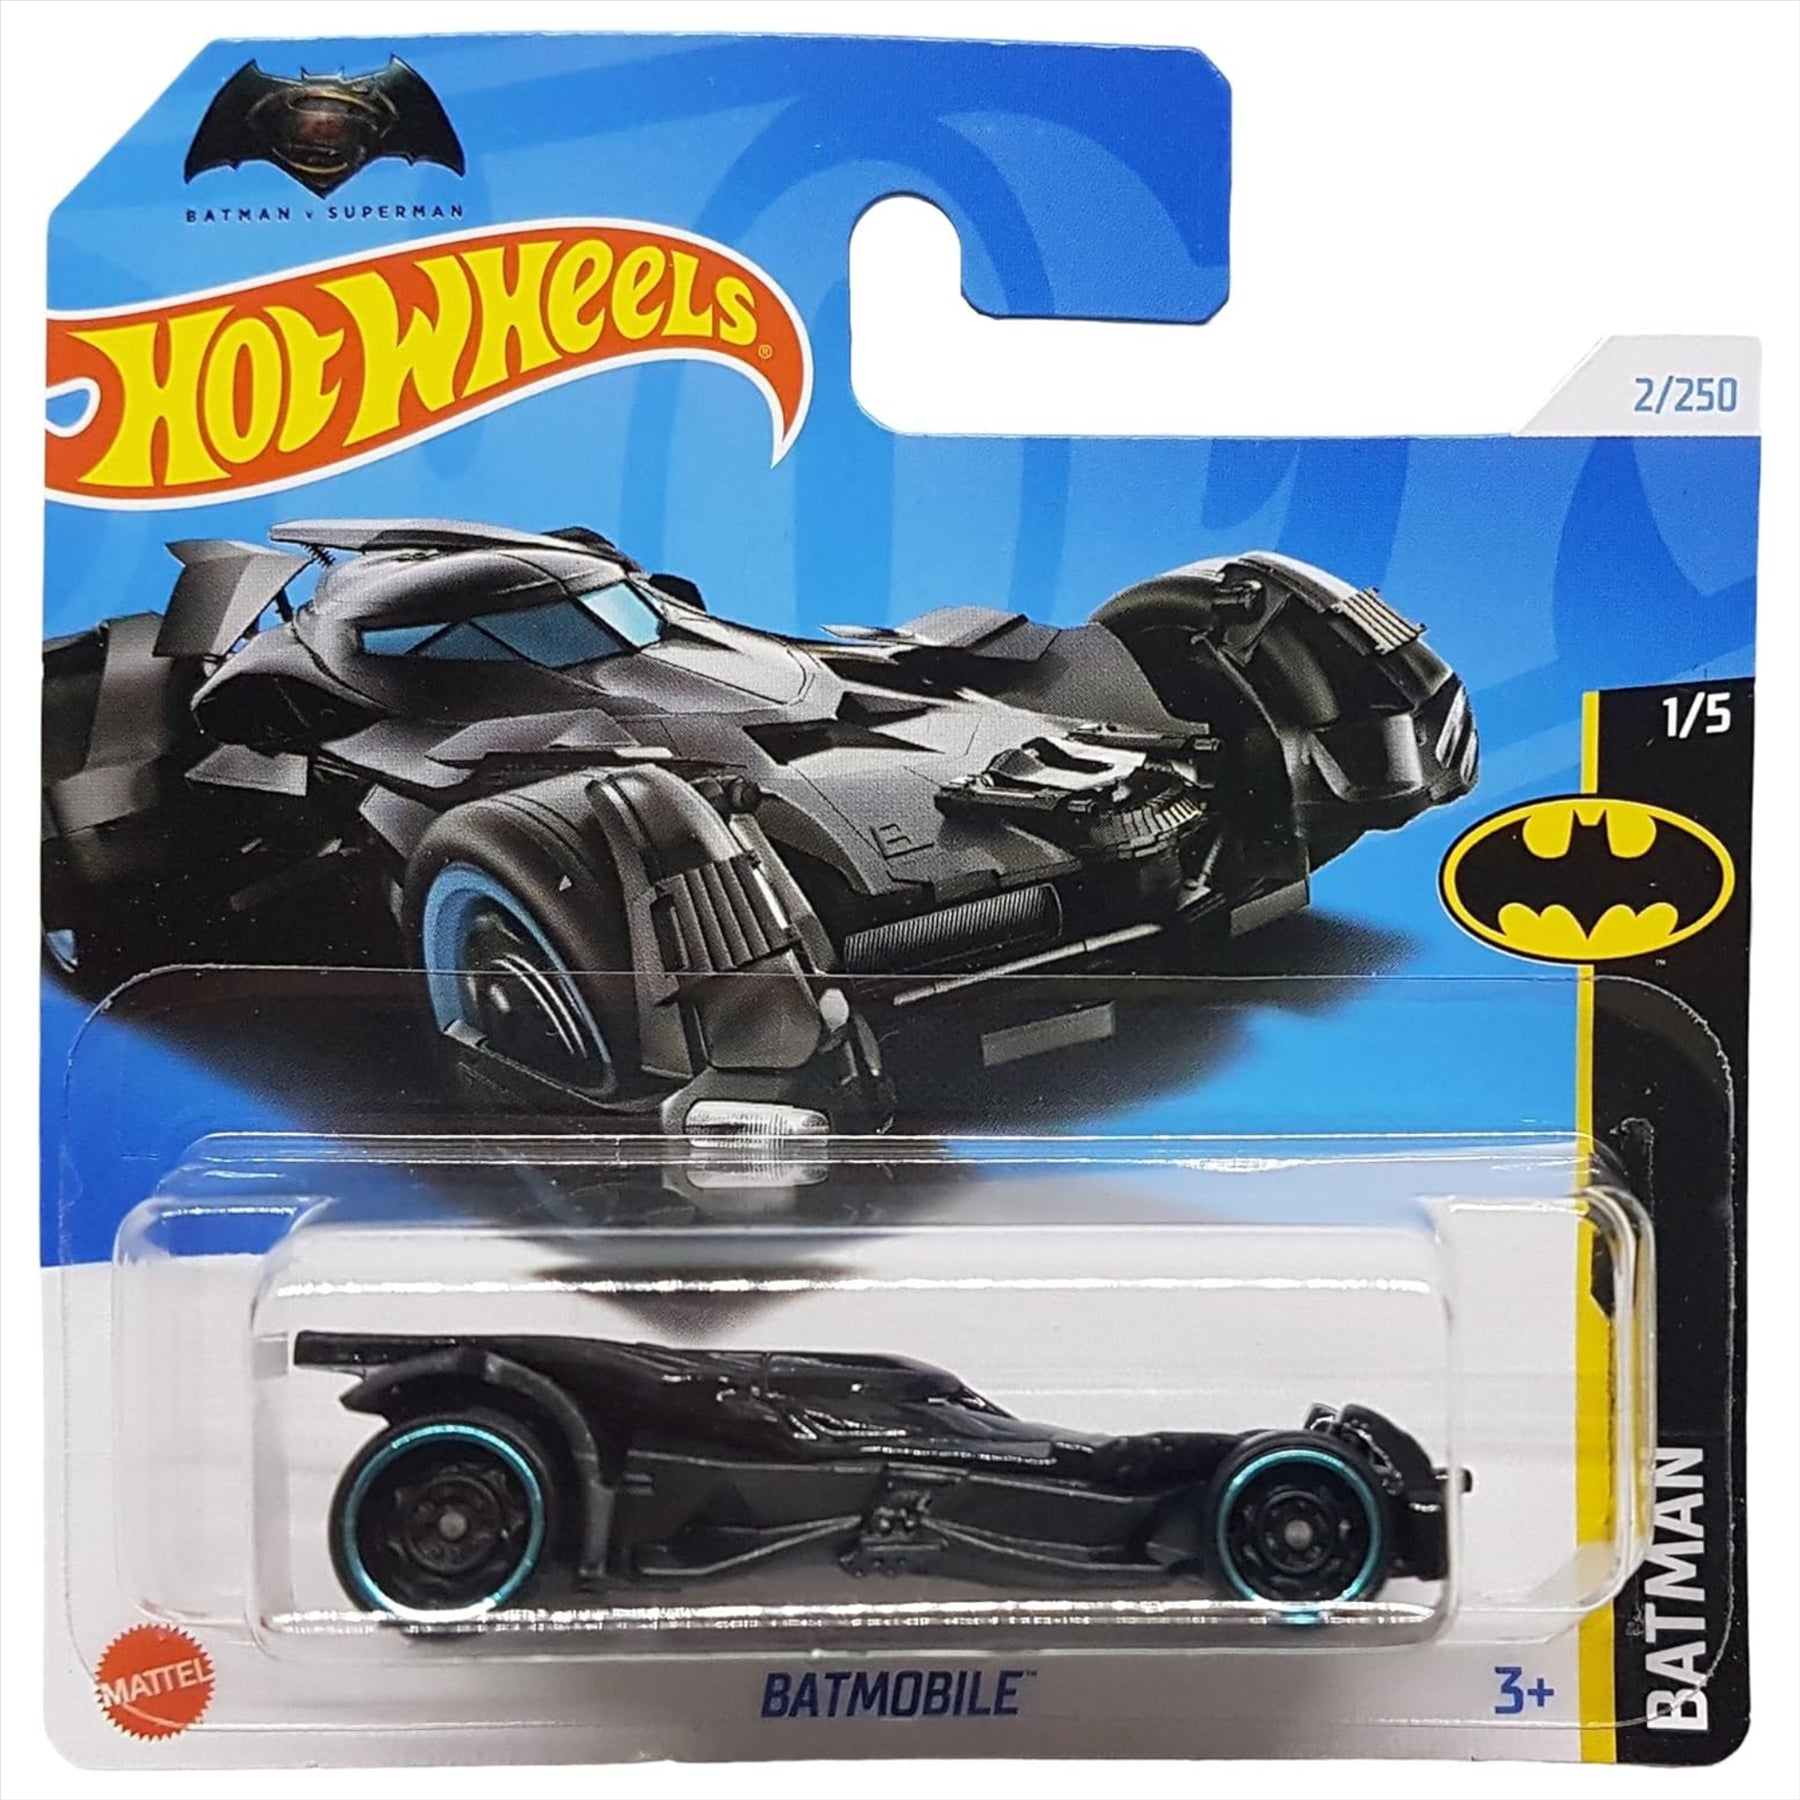 Hot Wheels DC Universe Batman vs Superman Batmobile 1:64 Scale Diecast Model Car 1/5 - Toptoys2u